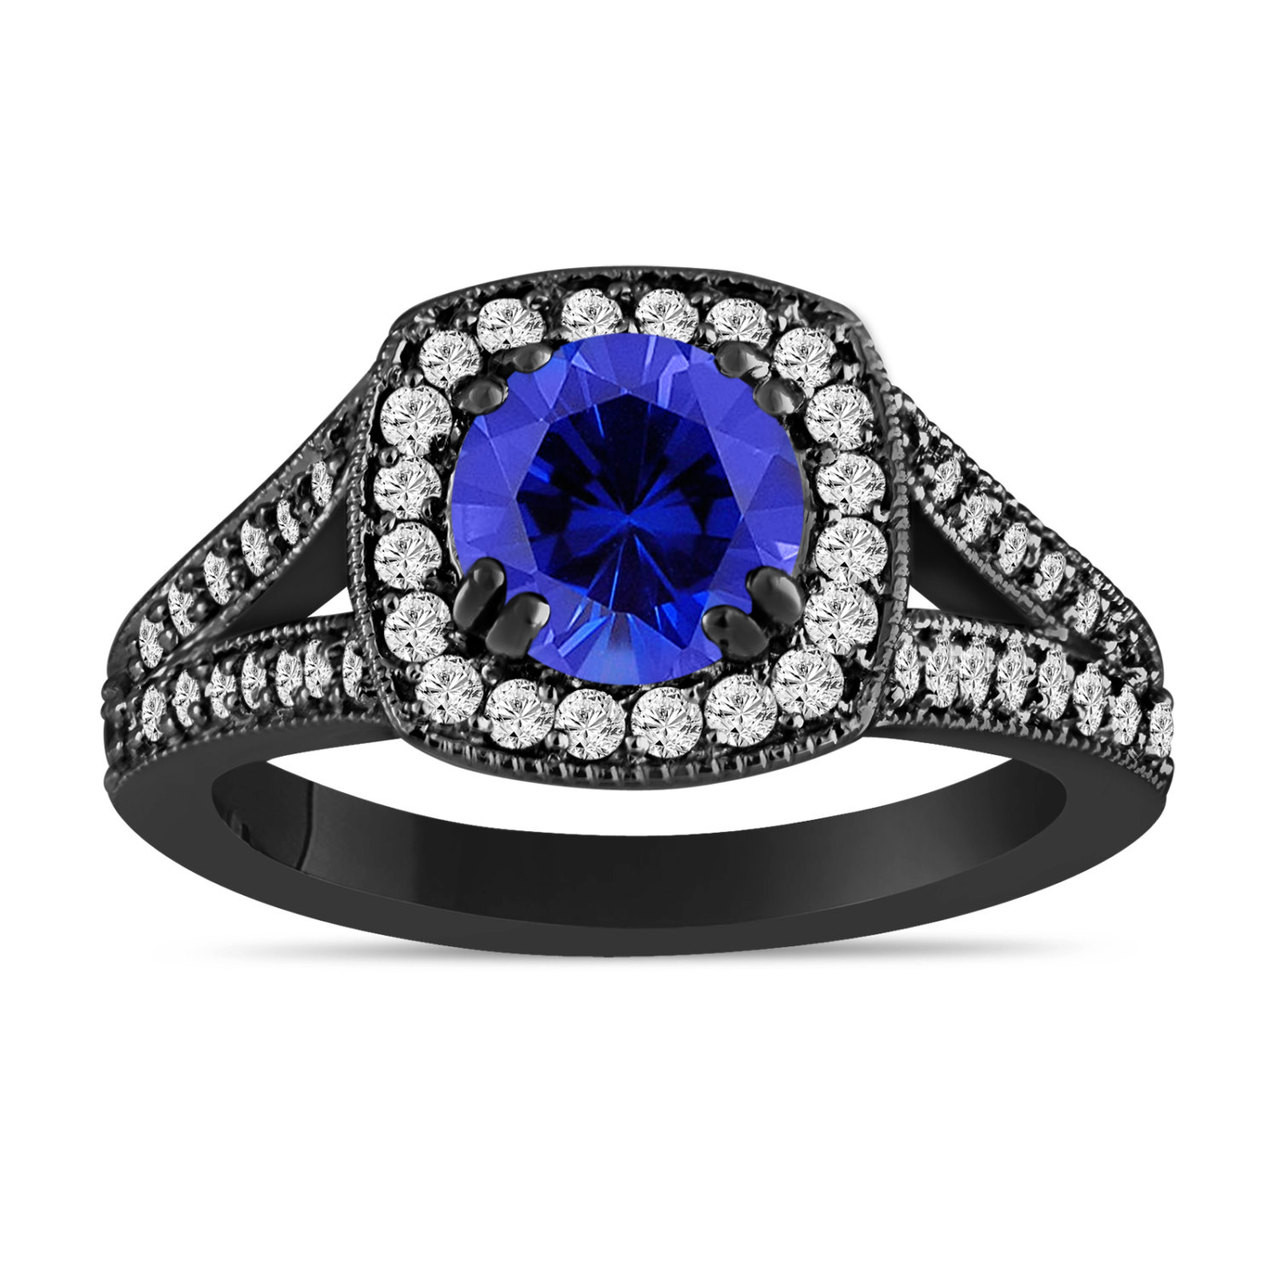  Blue  Sapphire And Diamond Engagement  Ring  1 58 Carat 